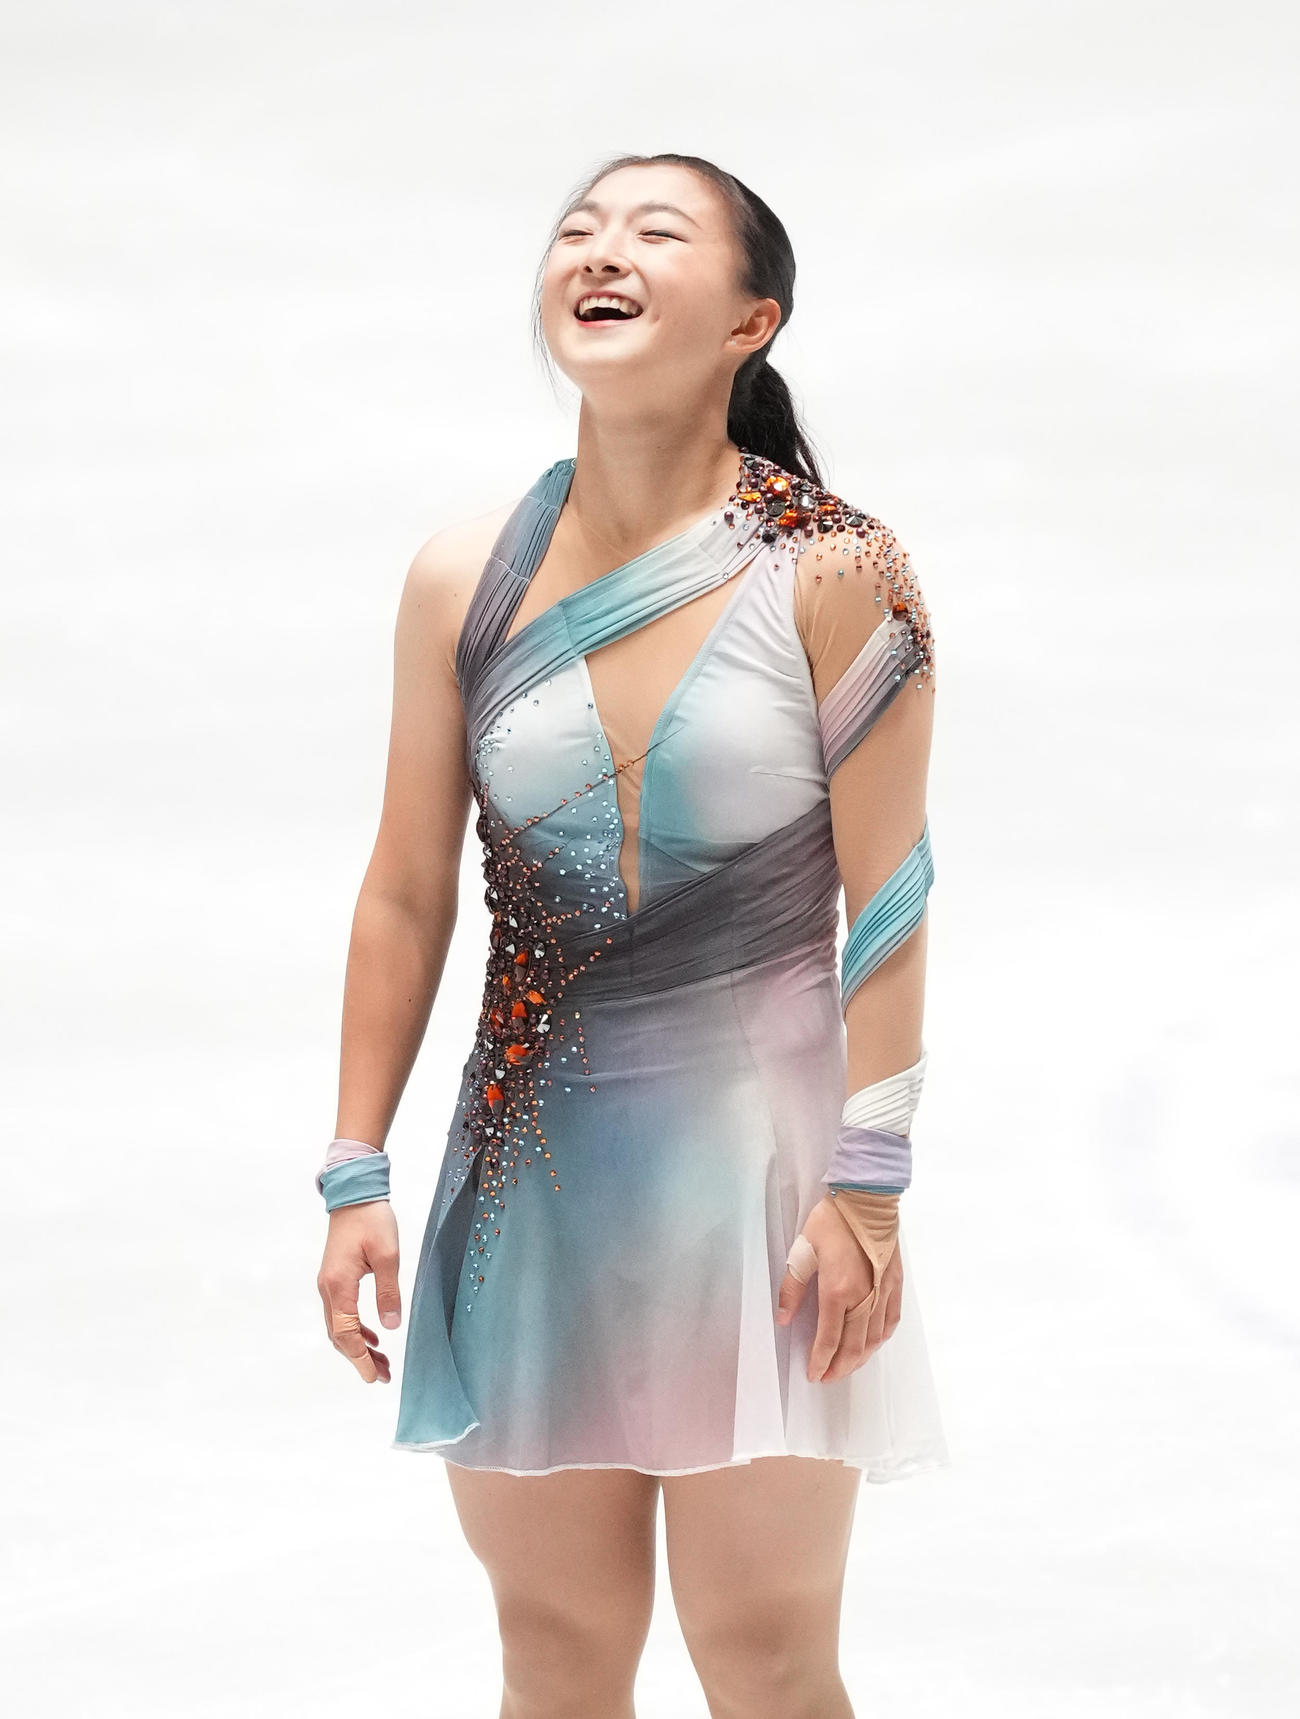 NHK杯女子SPの演技を終え、笑顔を見せる坂本（撮影・菅敏）